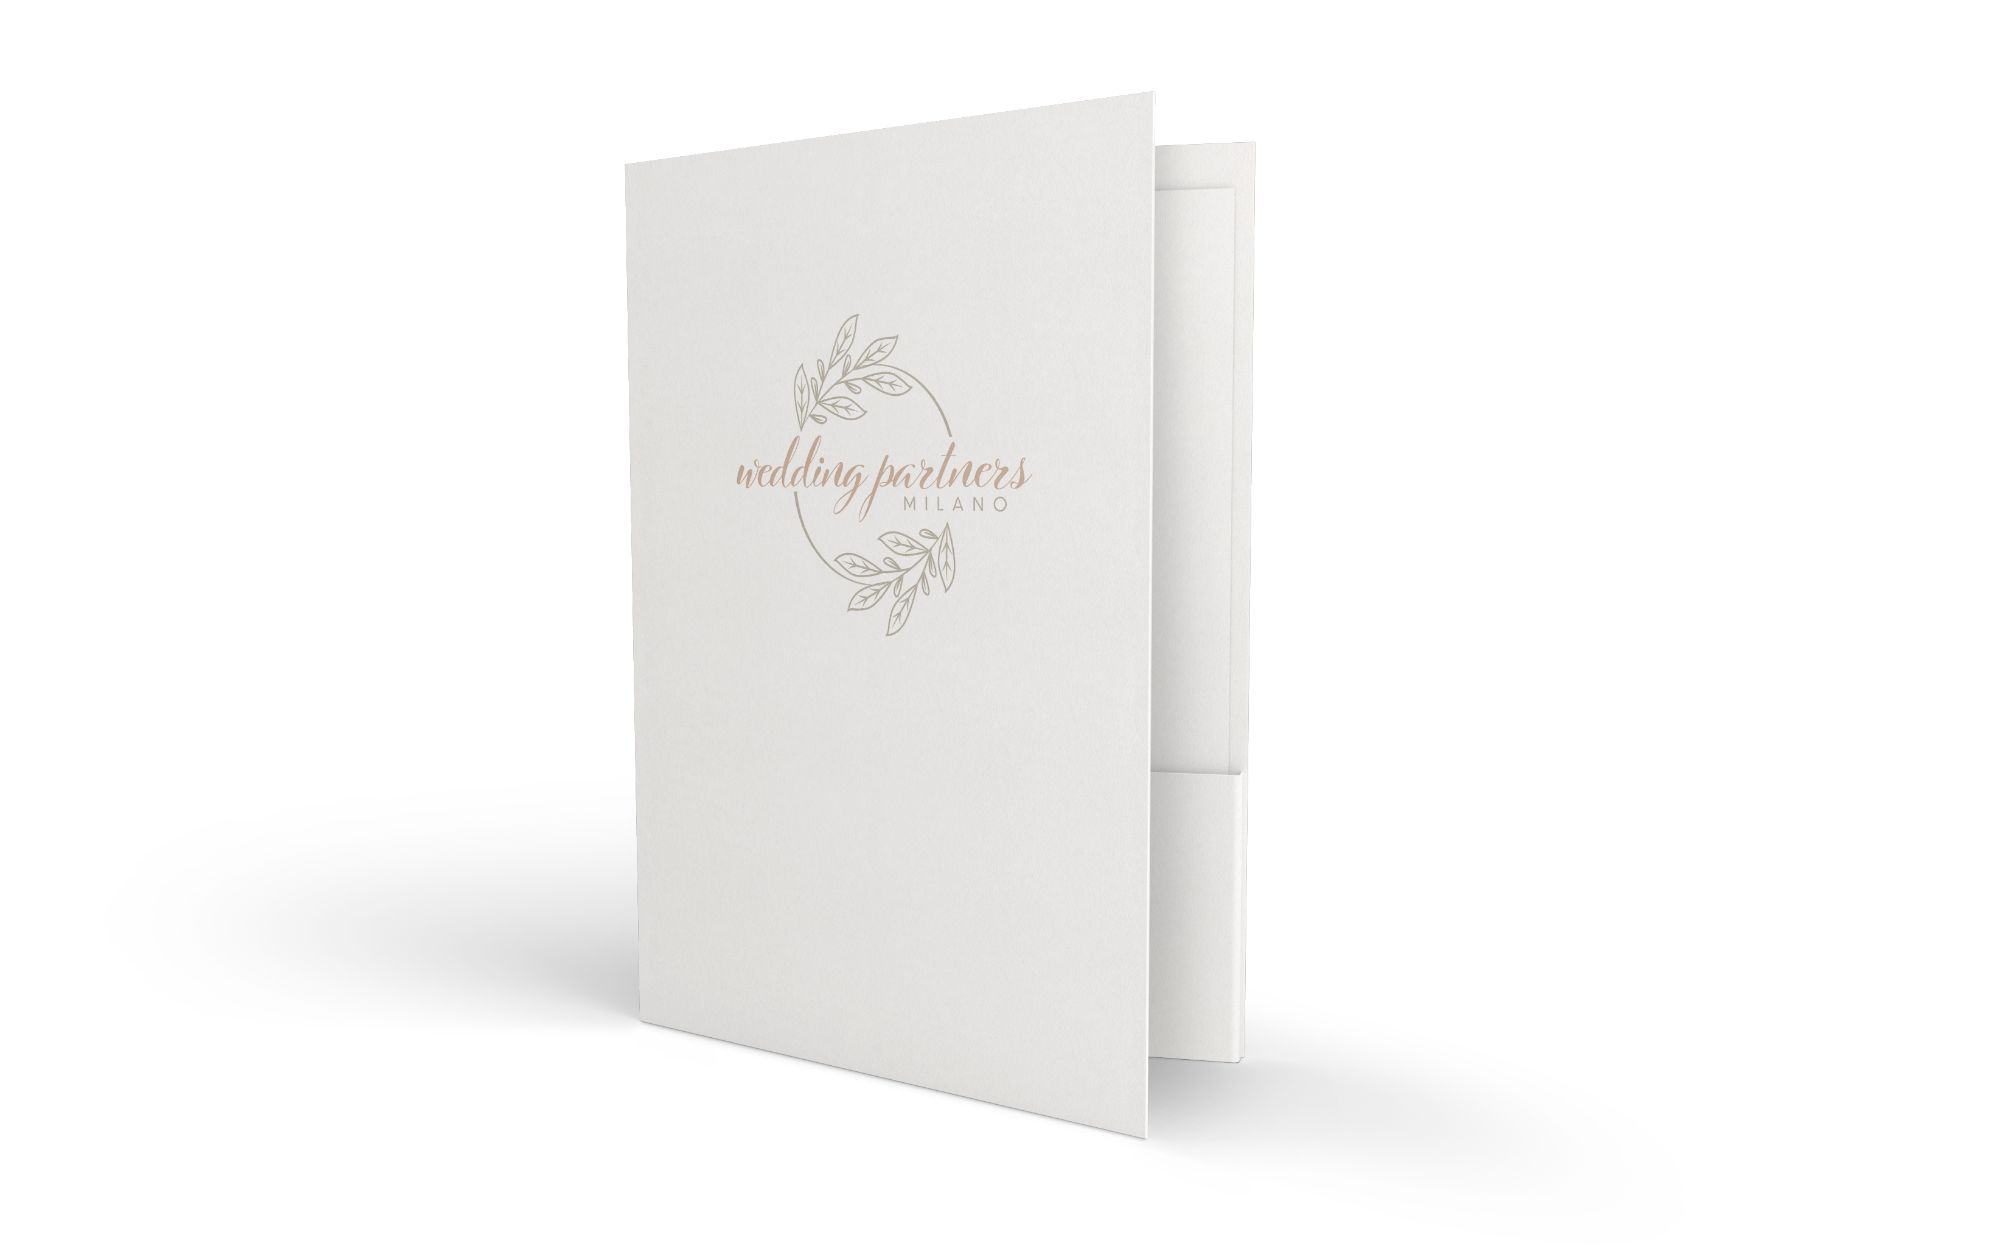 randomlab-progetti-wedding-partner-milano-folder